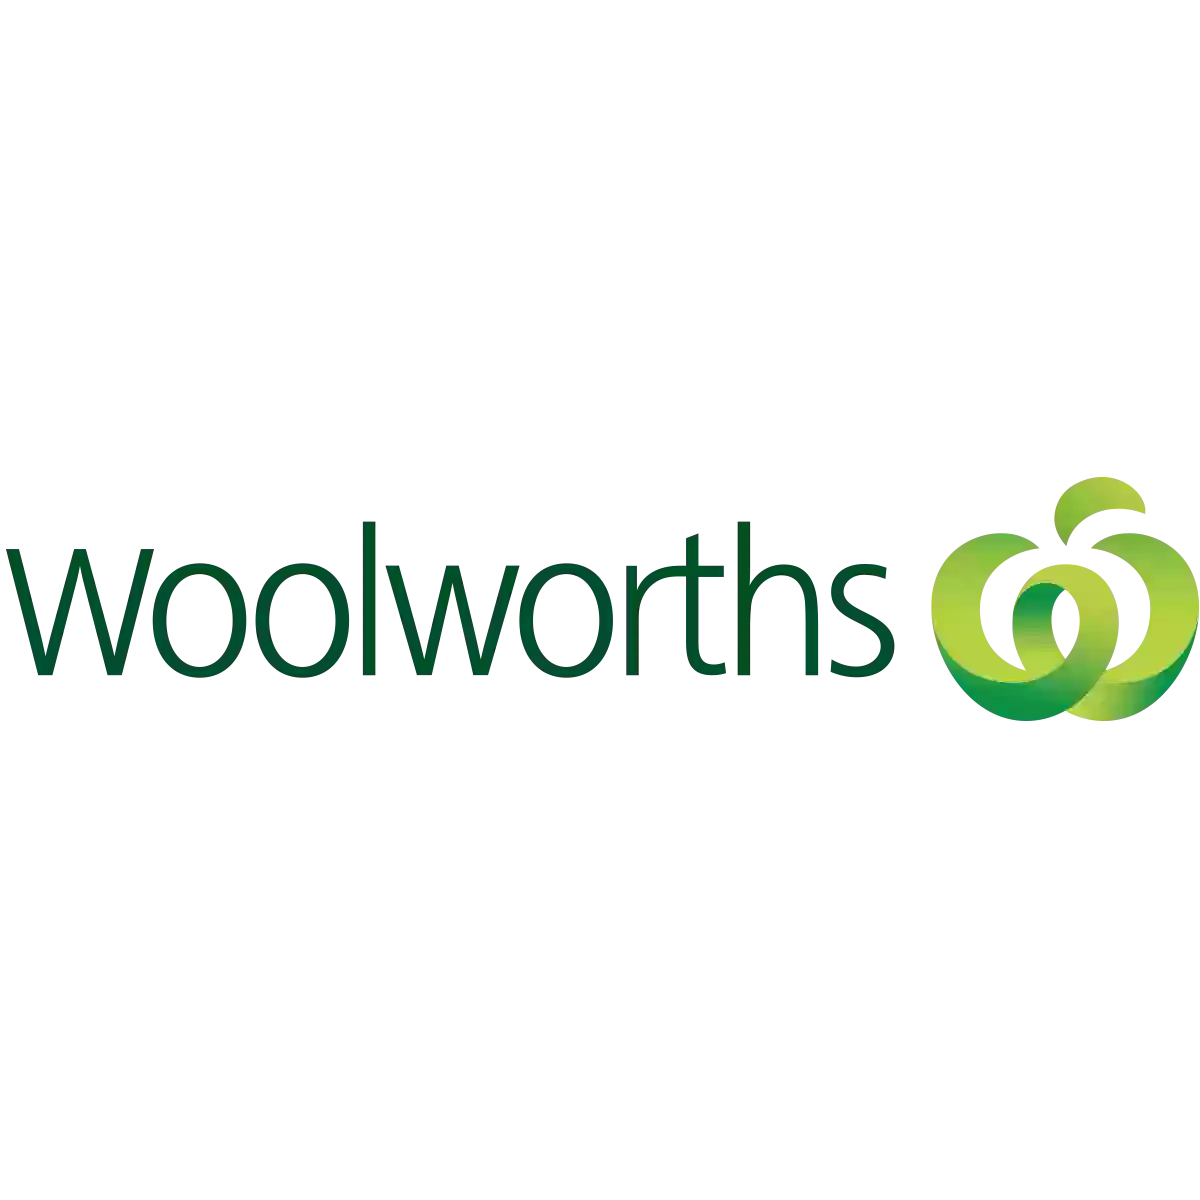 Woolworths Joondalup